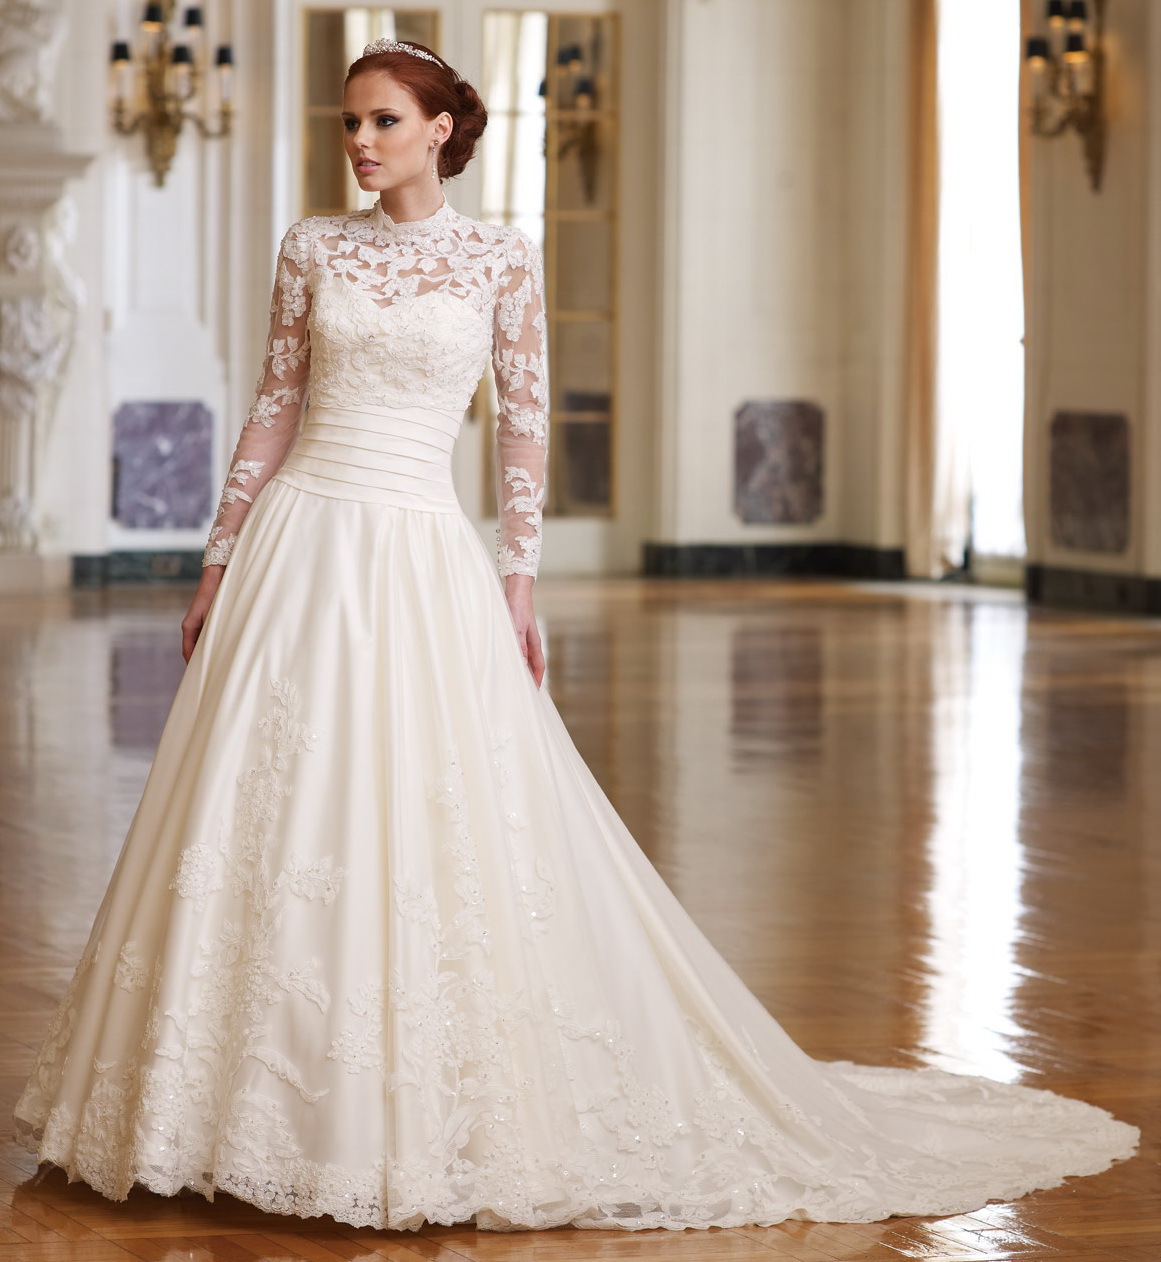 Wedding Dress Floor Length : Trends For Fall